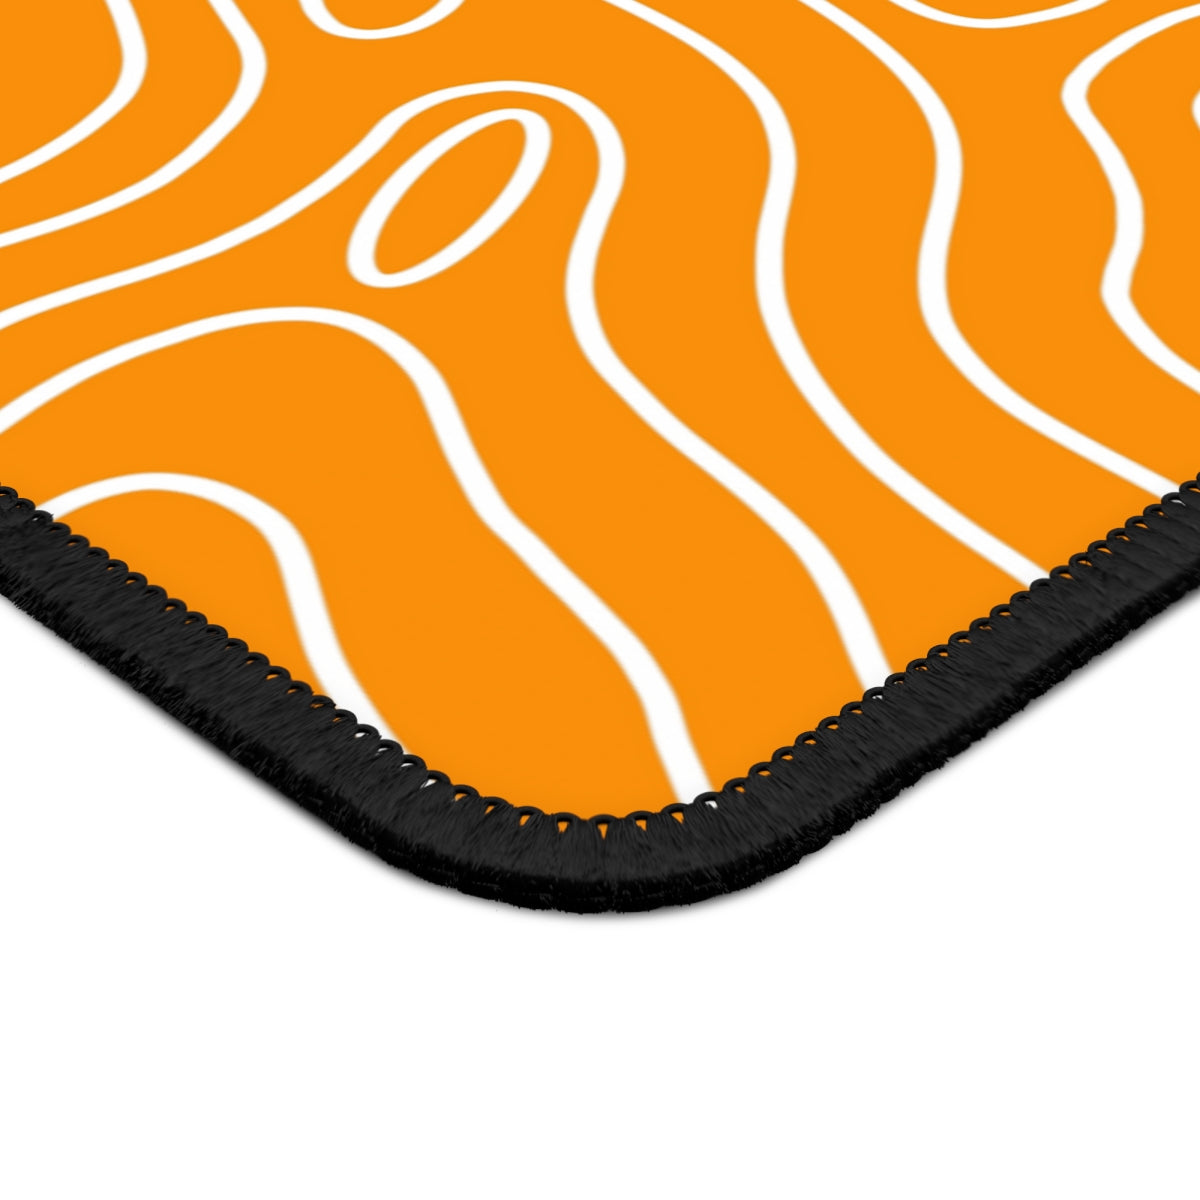 Orange Topographic Gaming Mouse Pad - Desk Cookies